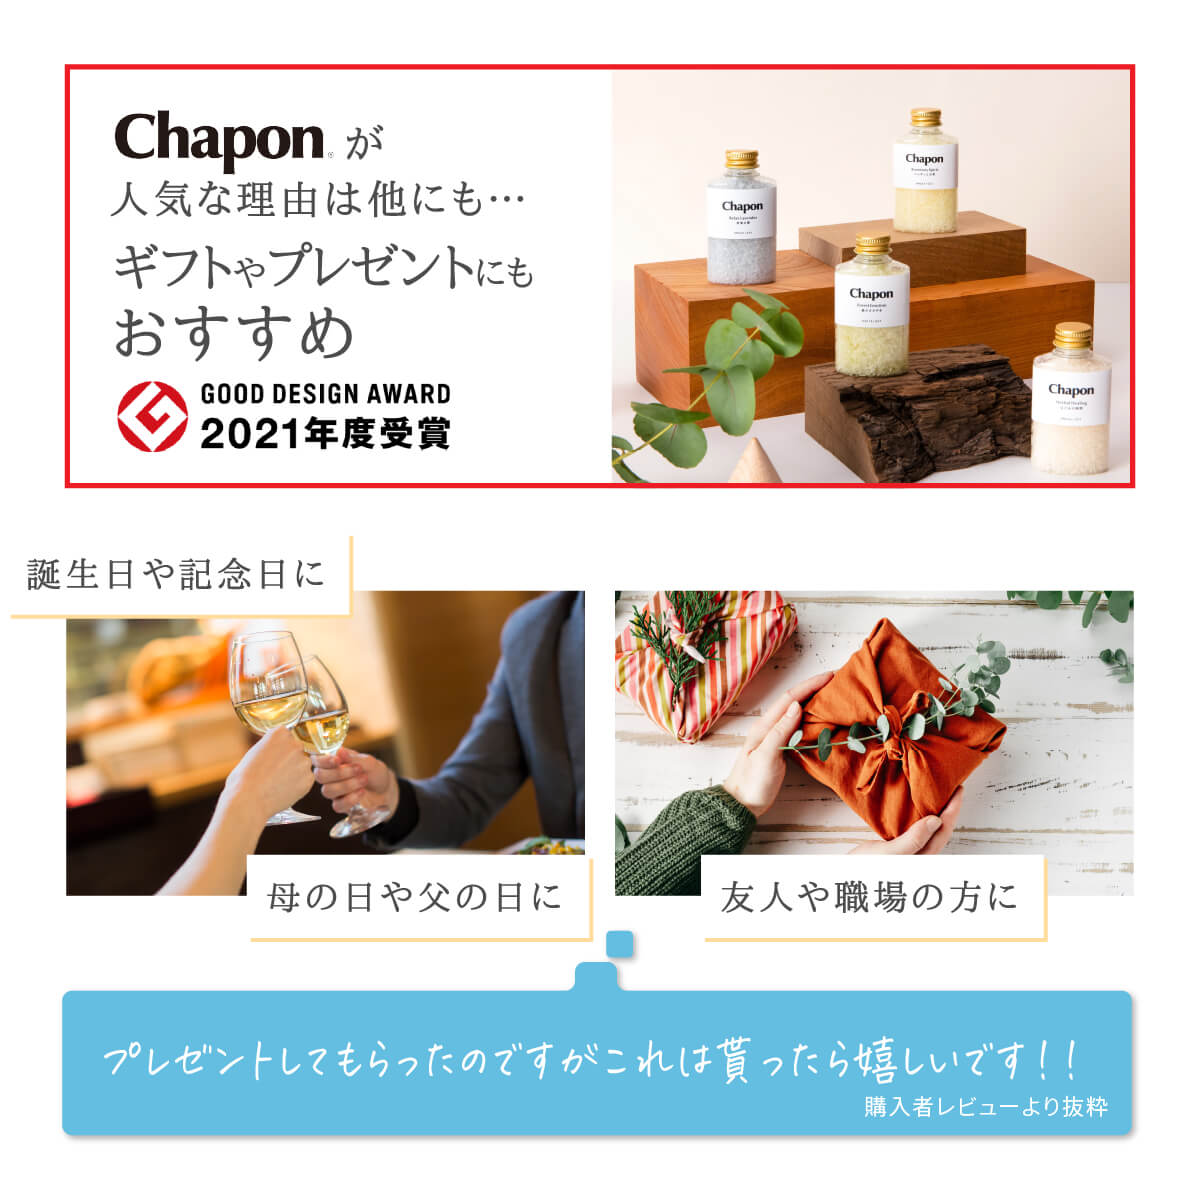 【Chapon専用紙袋】 Chapon バスソルト 入浴剤 ギフト プレゼント におすすめ 3